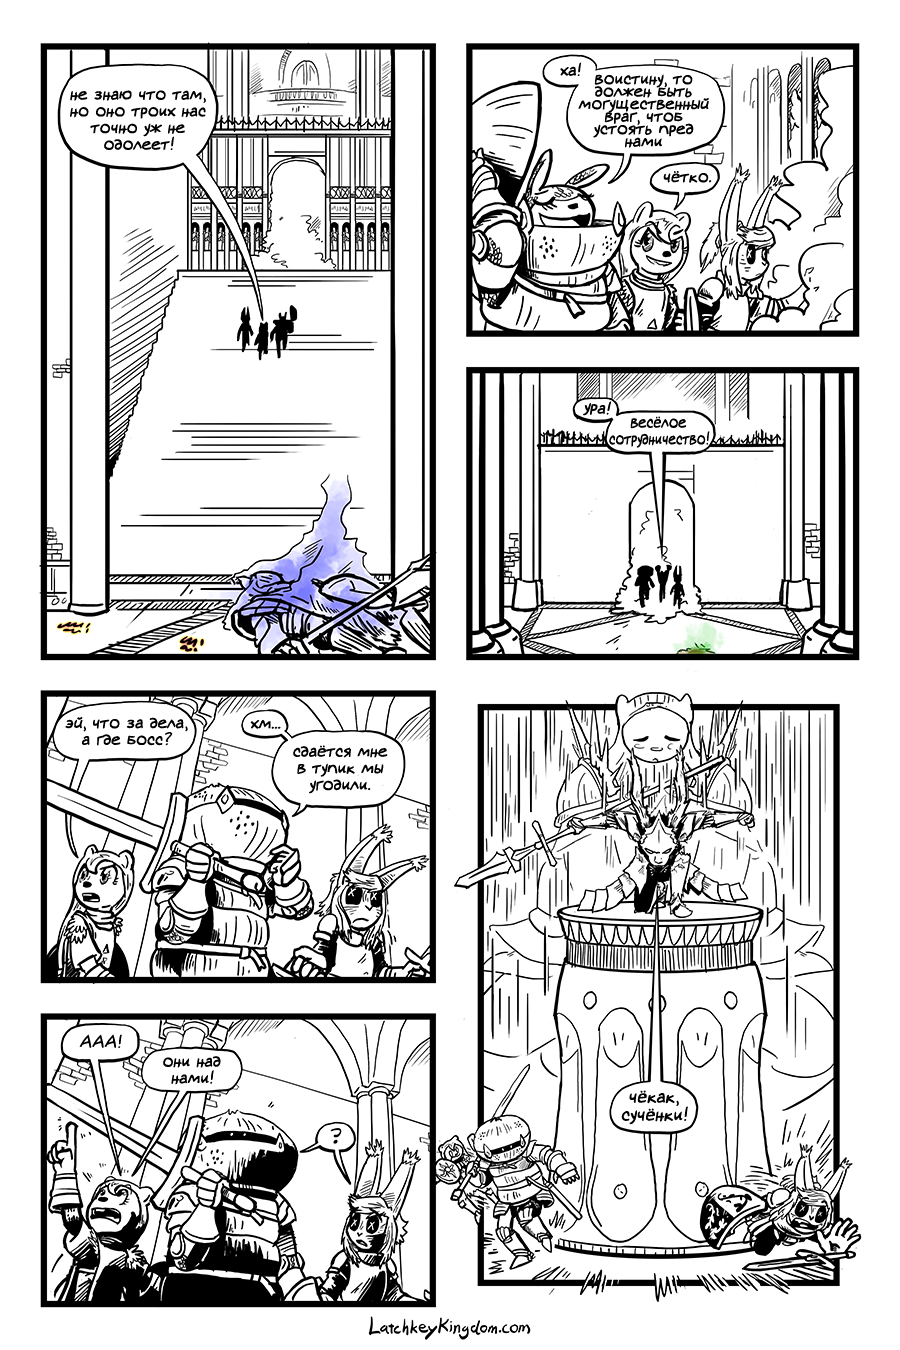 Комикс Беспризорное Царство [Latchkey Kingdom]: выпуск №116